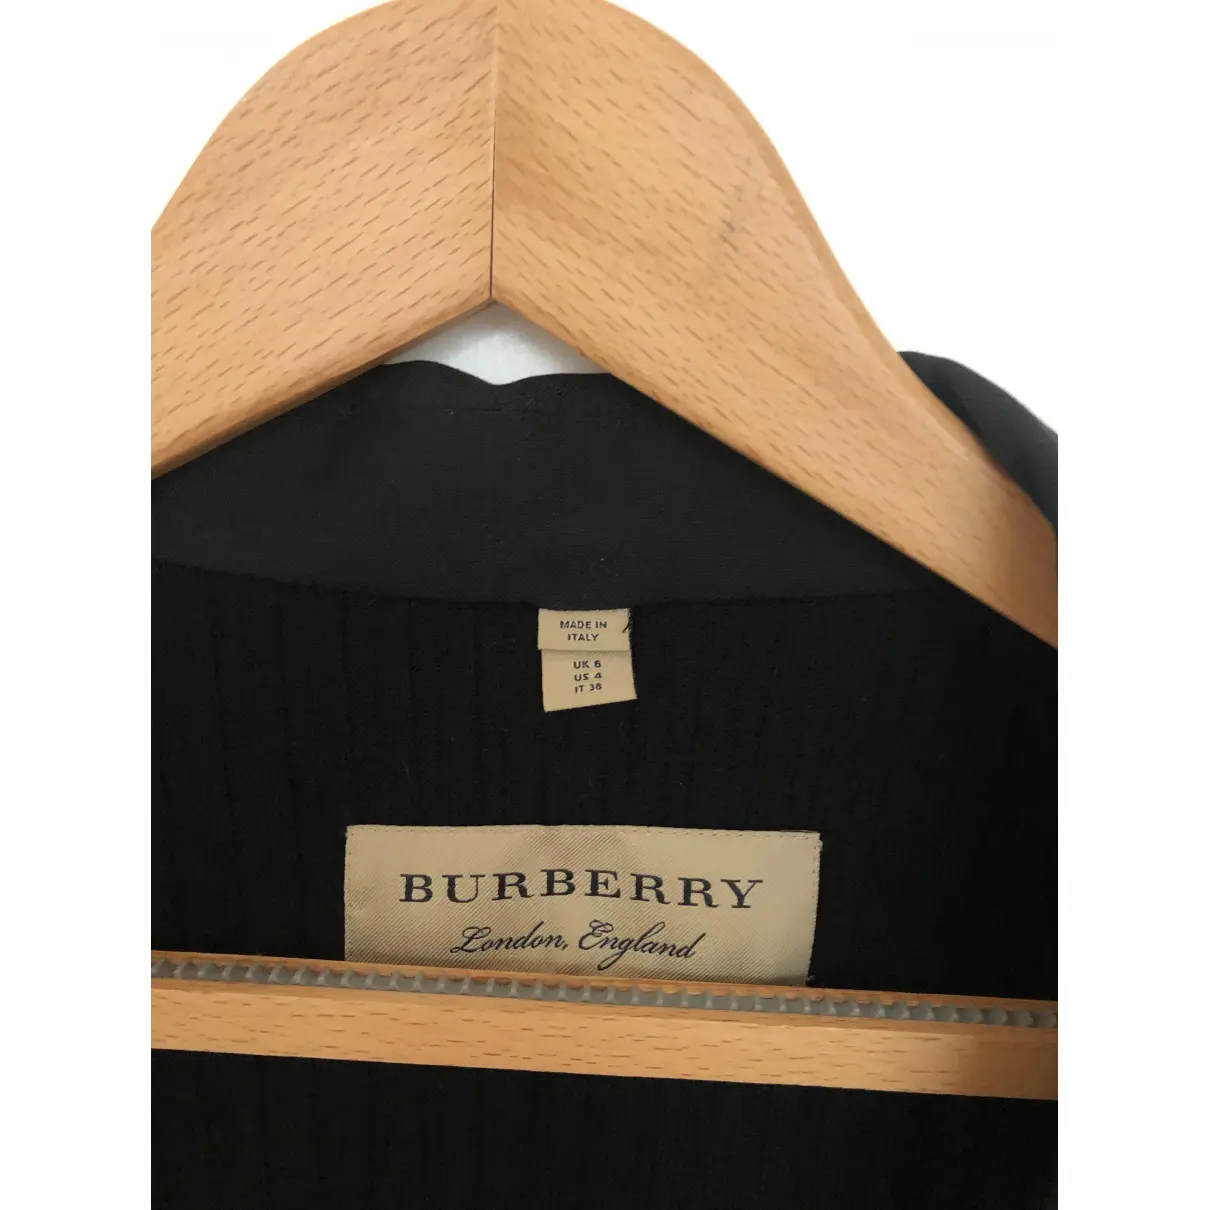 Buy Burberry Wool mini dress online